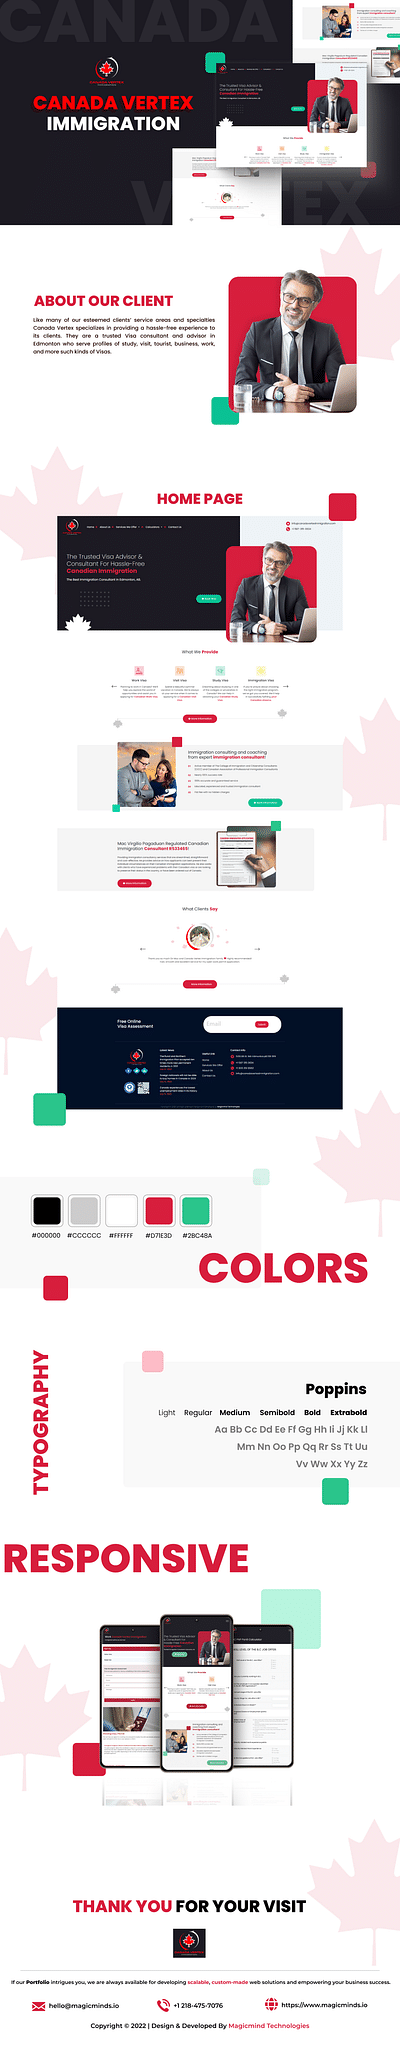 Canada Vertex: Website for Immigration Consultants - Applicazione web